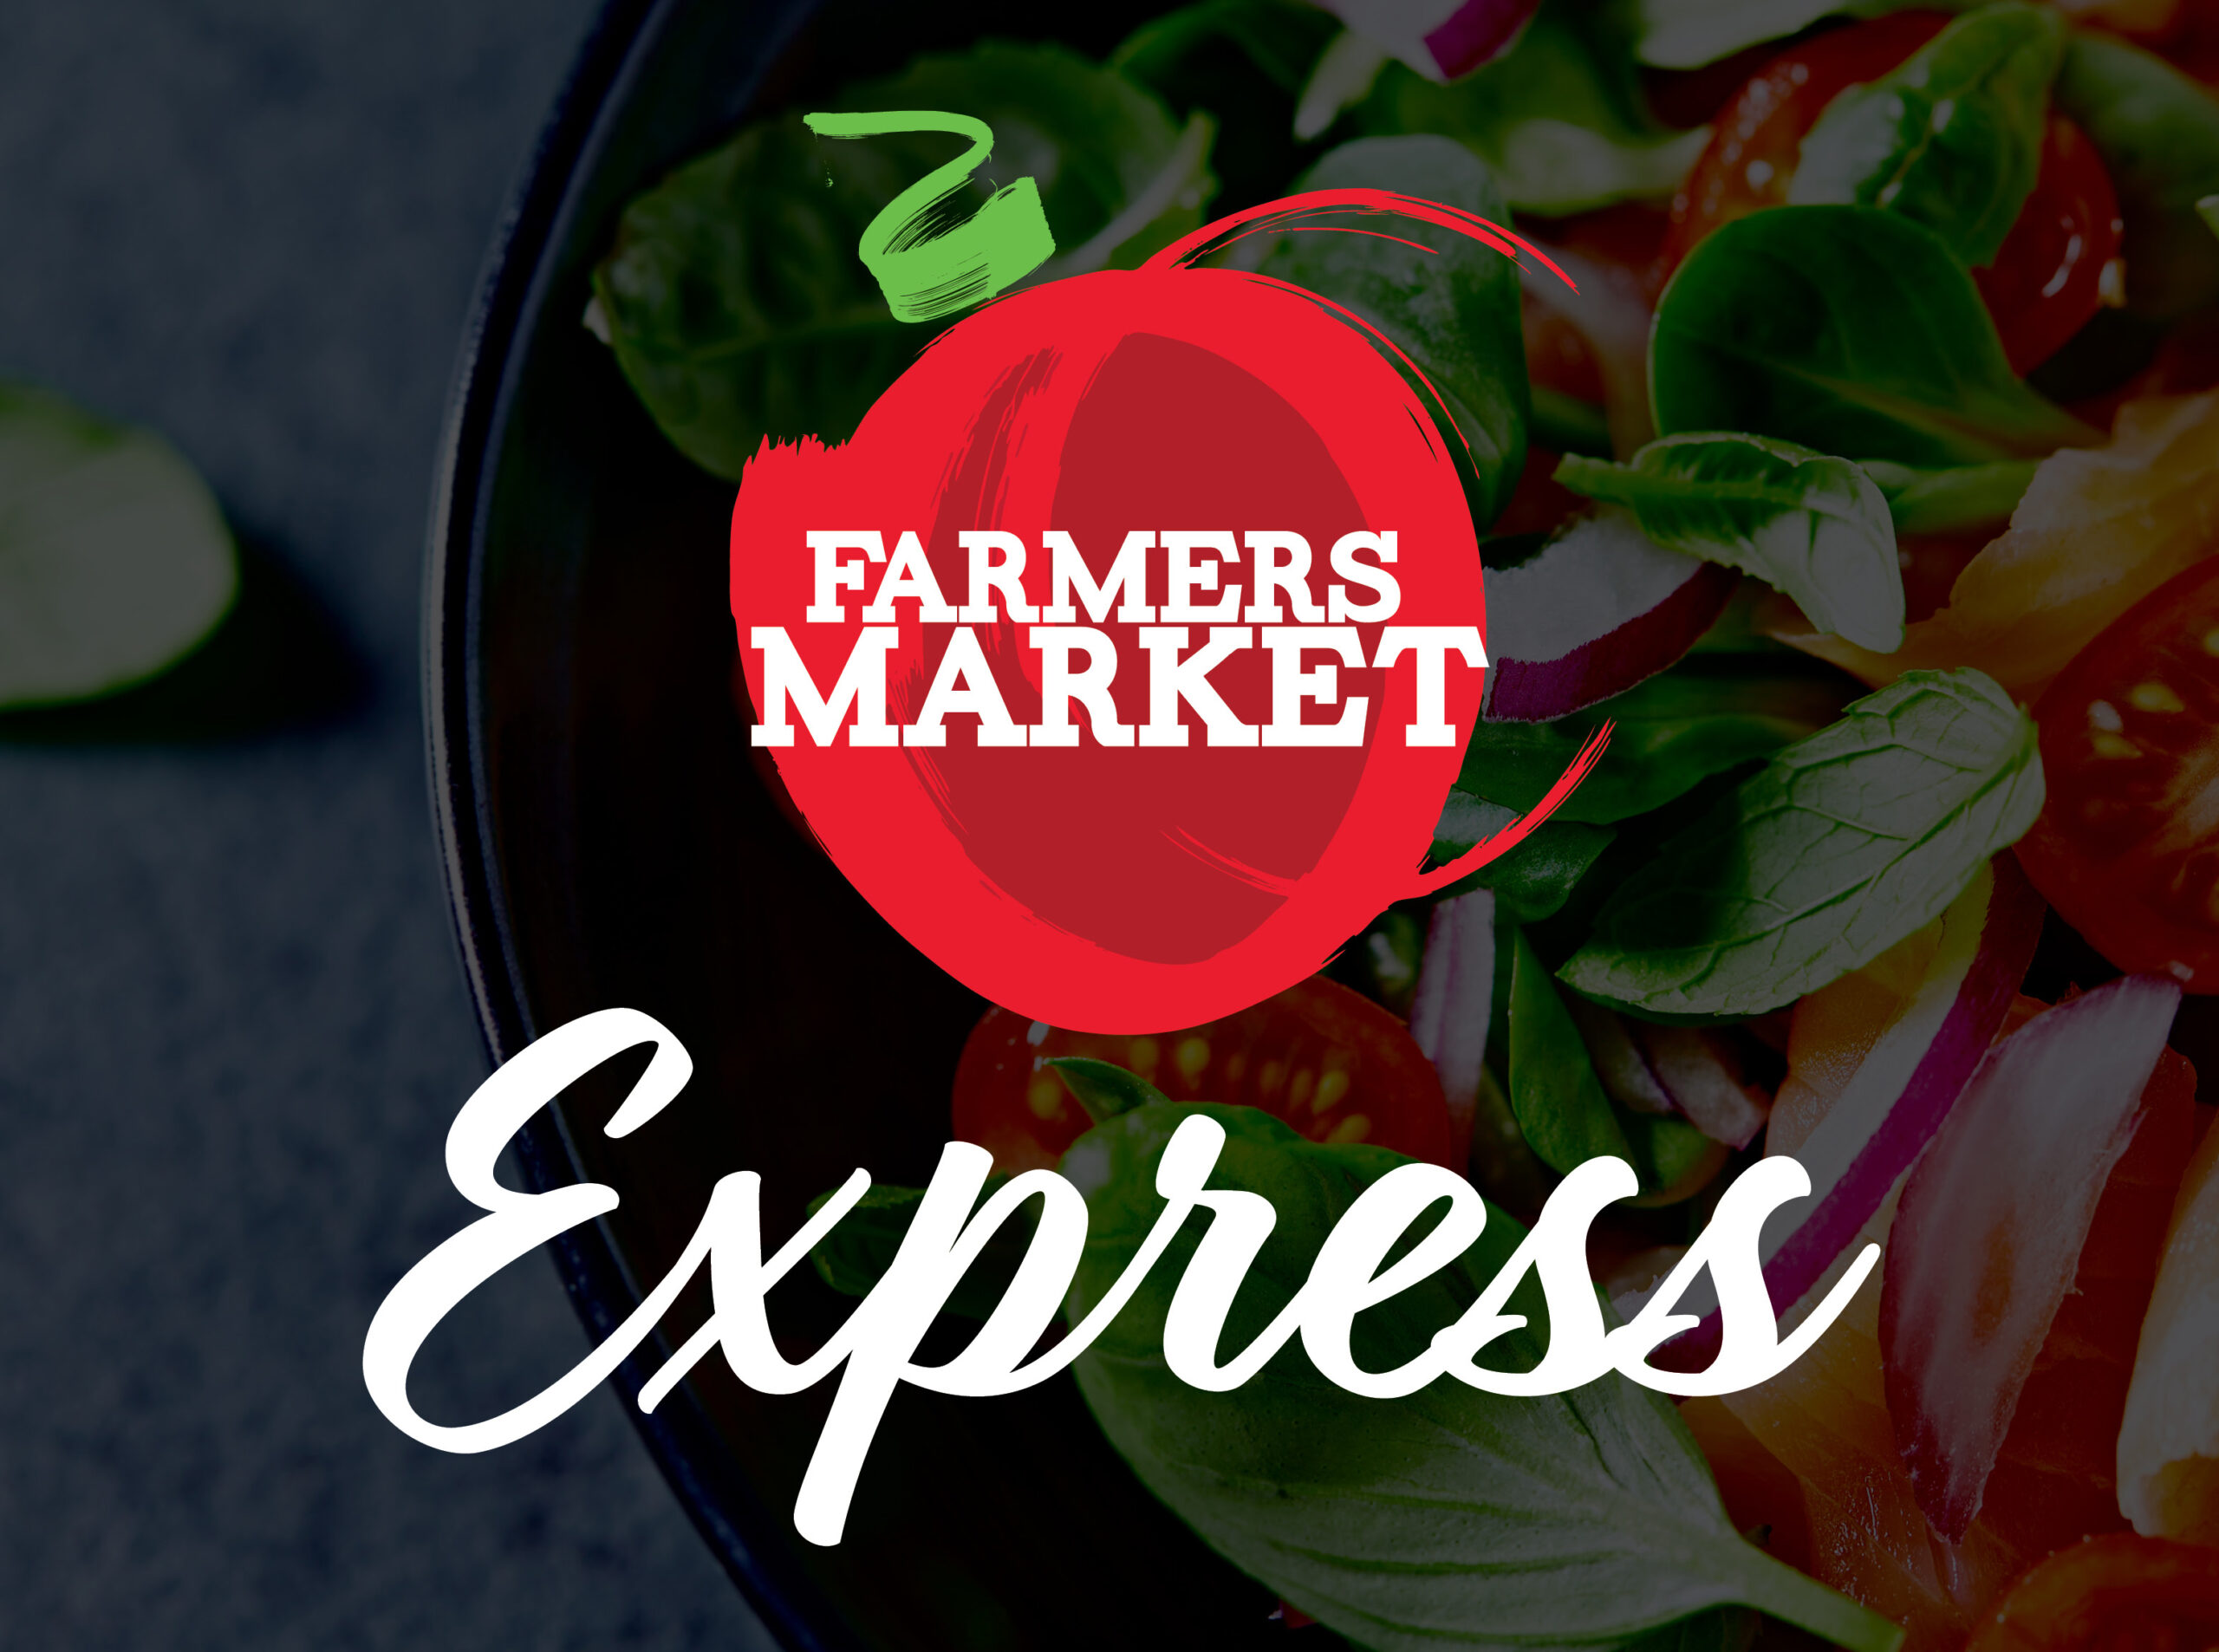 Farmers Market Express